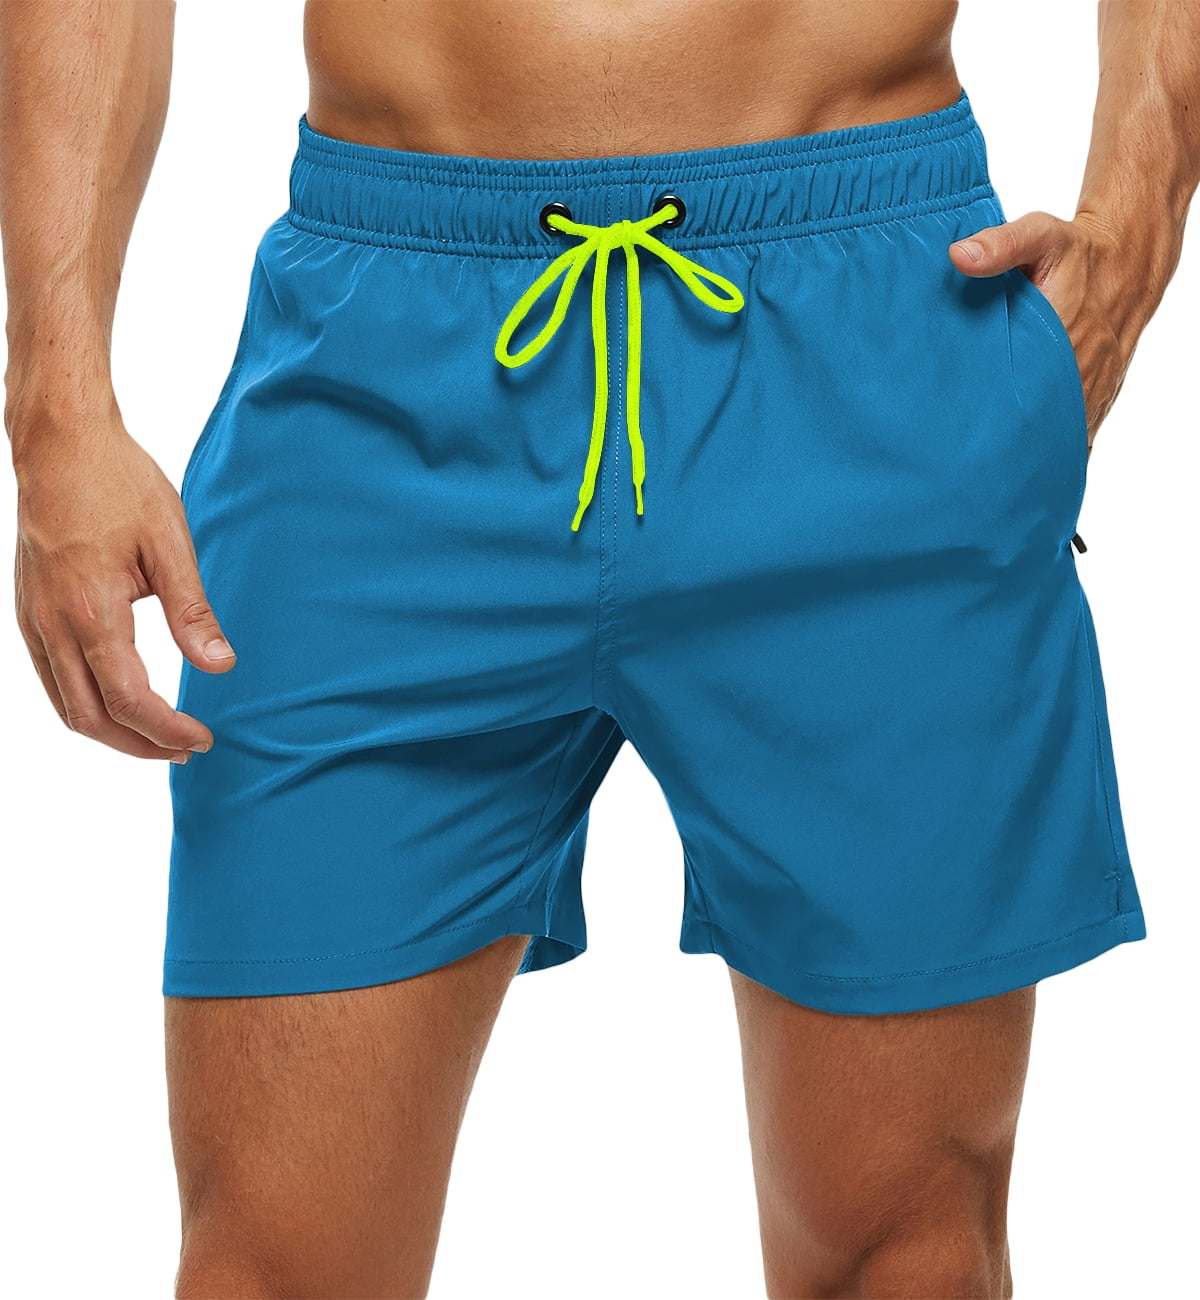 SILKWORLD Men's Swim Trunks Quick Dry Athletic Swimwear Shorts with Mesh Lining and Pockets